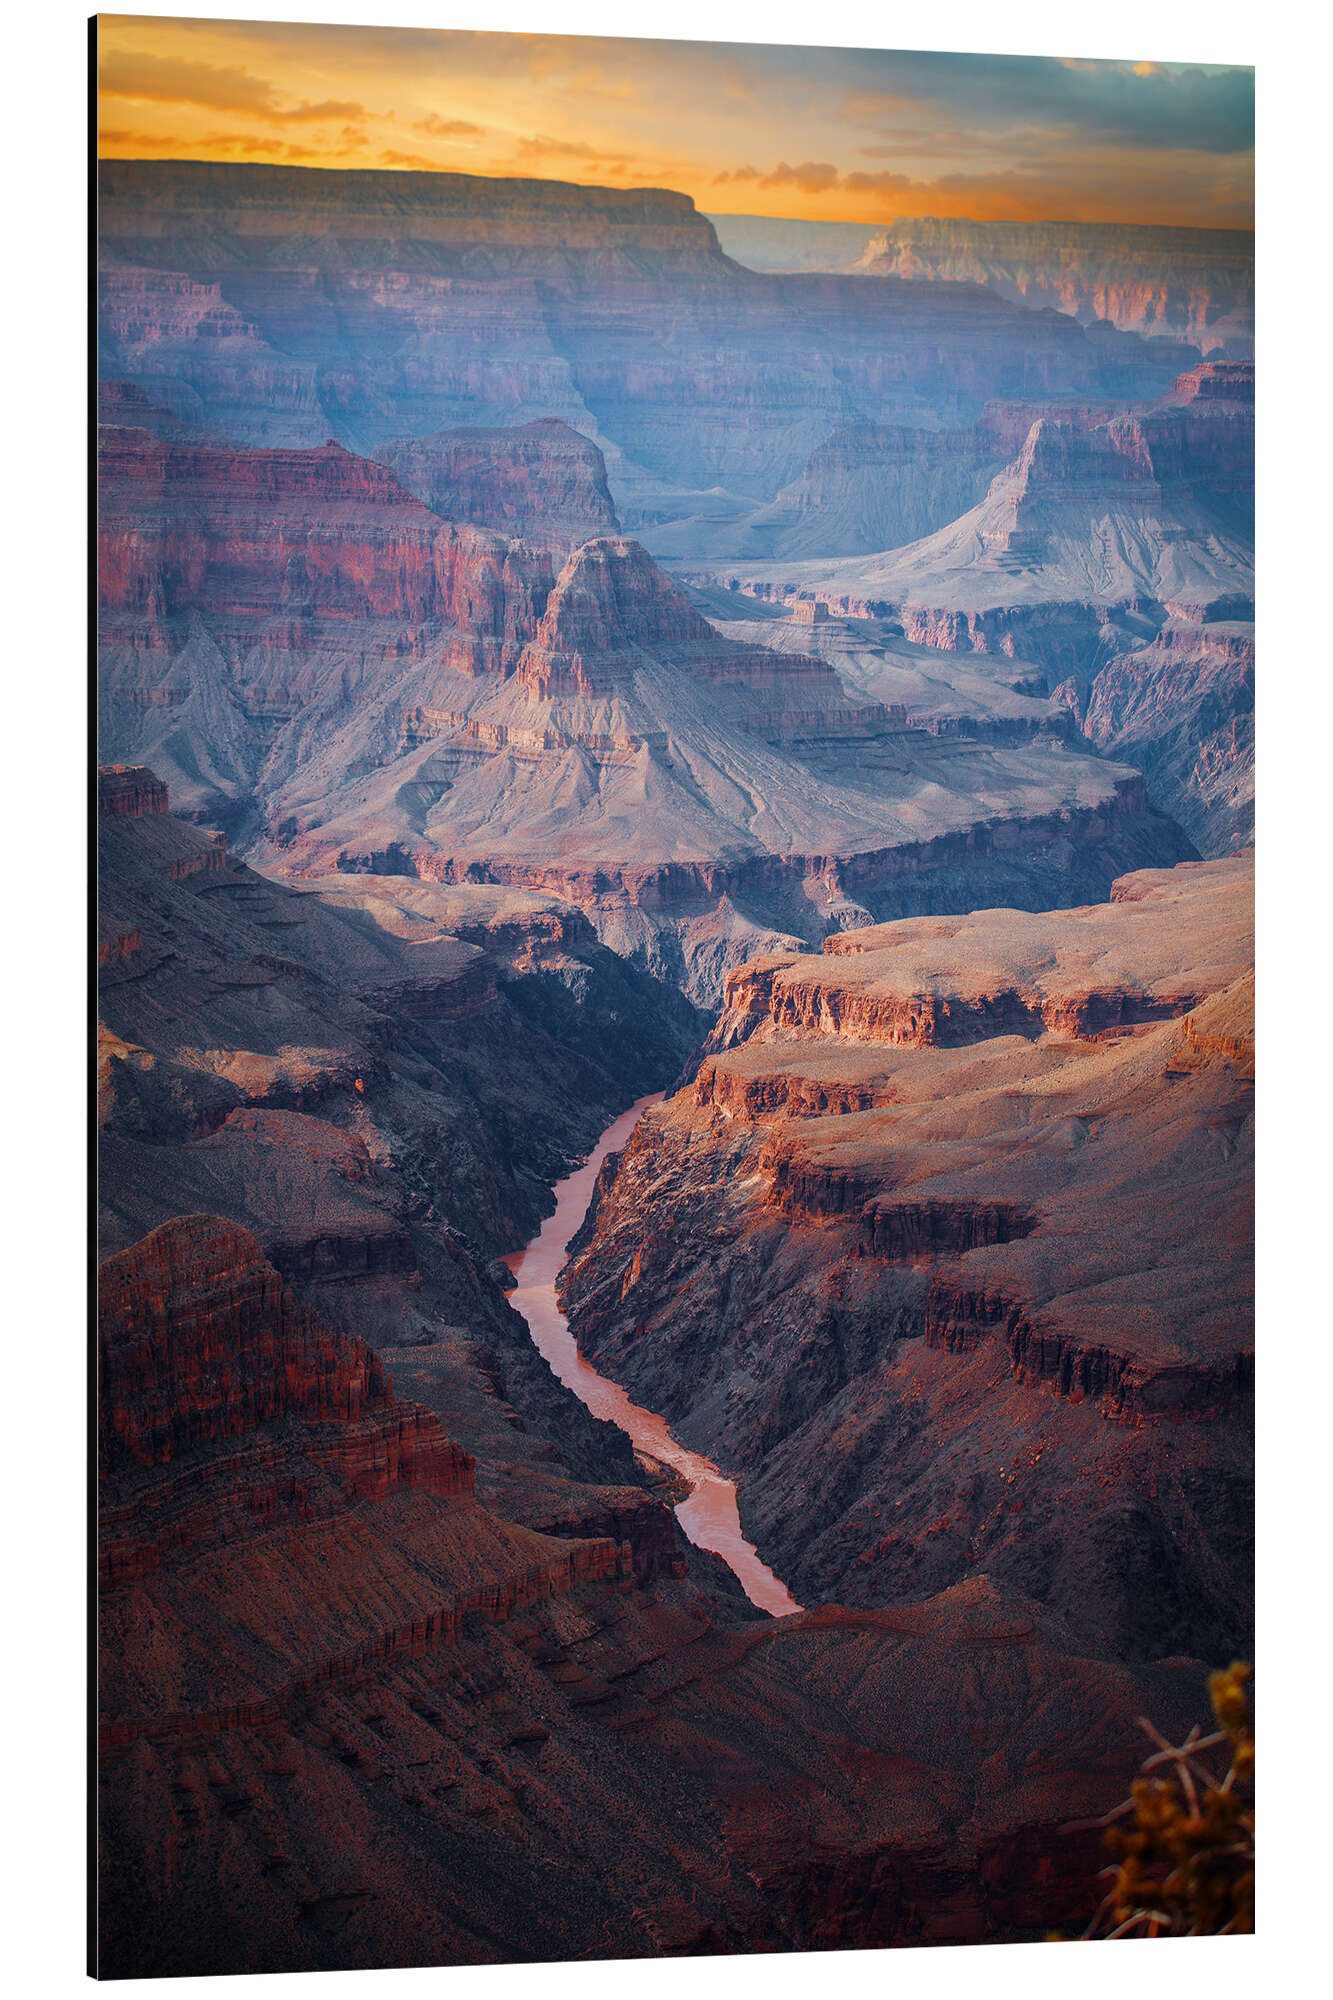 Posterlounge Alu-Dibond-Druck Editors Choice, Wunderschöner Sonnenaufgang am Grand Canyon, Fotografie